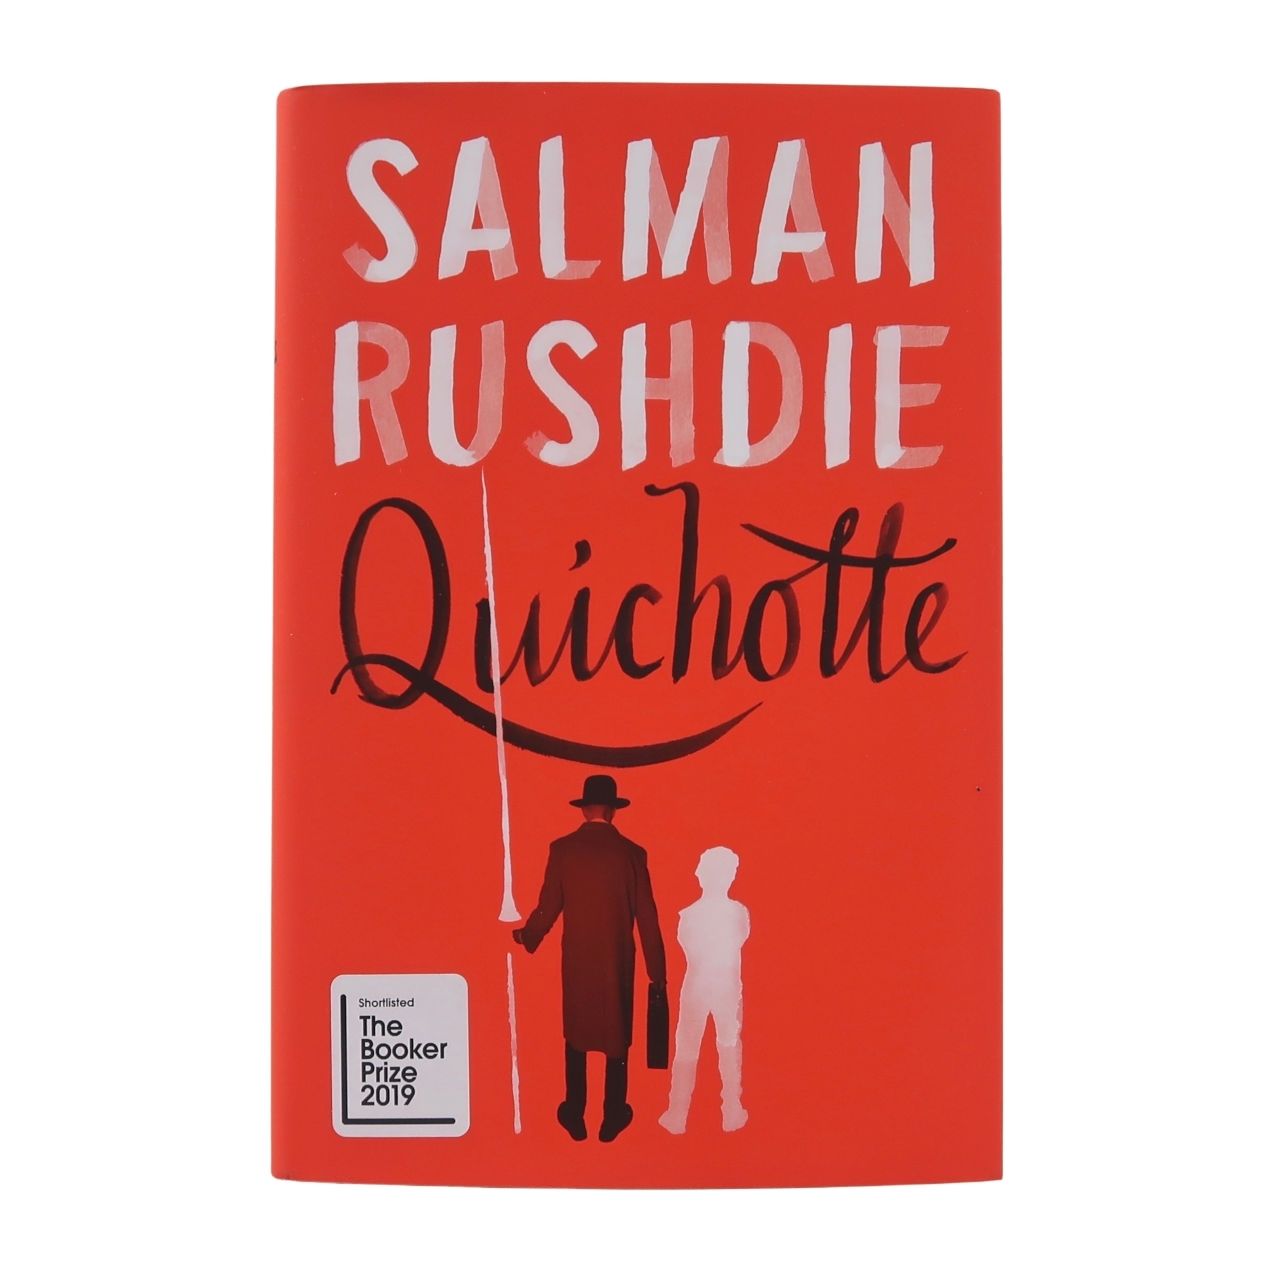 Jonathan Cape Quichotte Book by Salman Rushdie